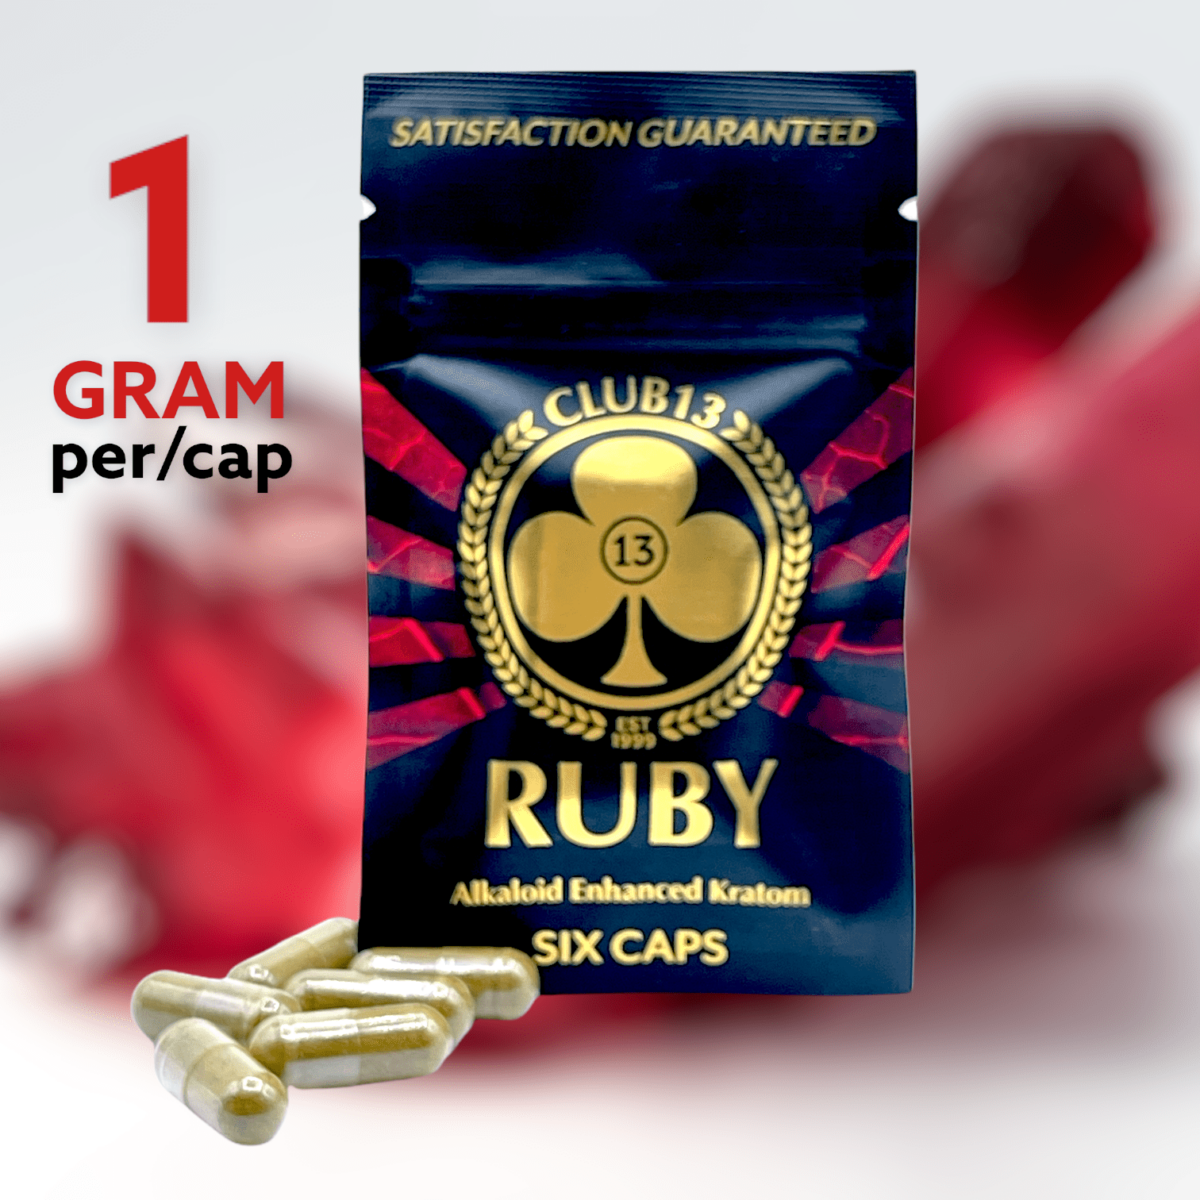 Club 13 Enhanced RUBY Maeng Da Extract Kratom Capsules – 6 count